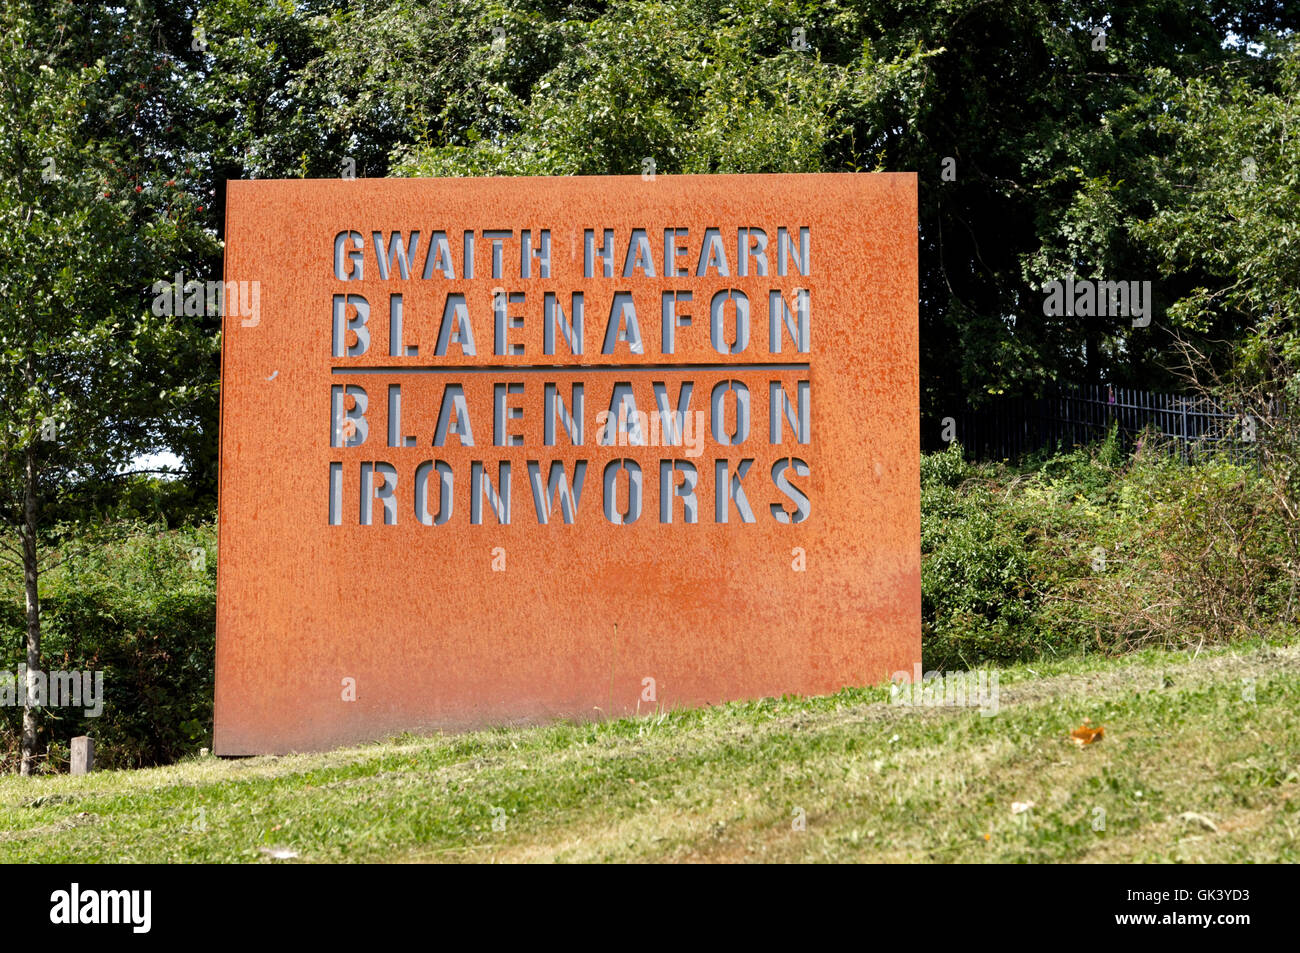 Blaenavon Ironworks, Torfaen, South Wales Valleys. Stock Photo